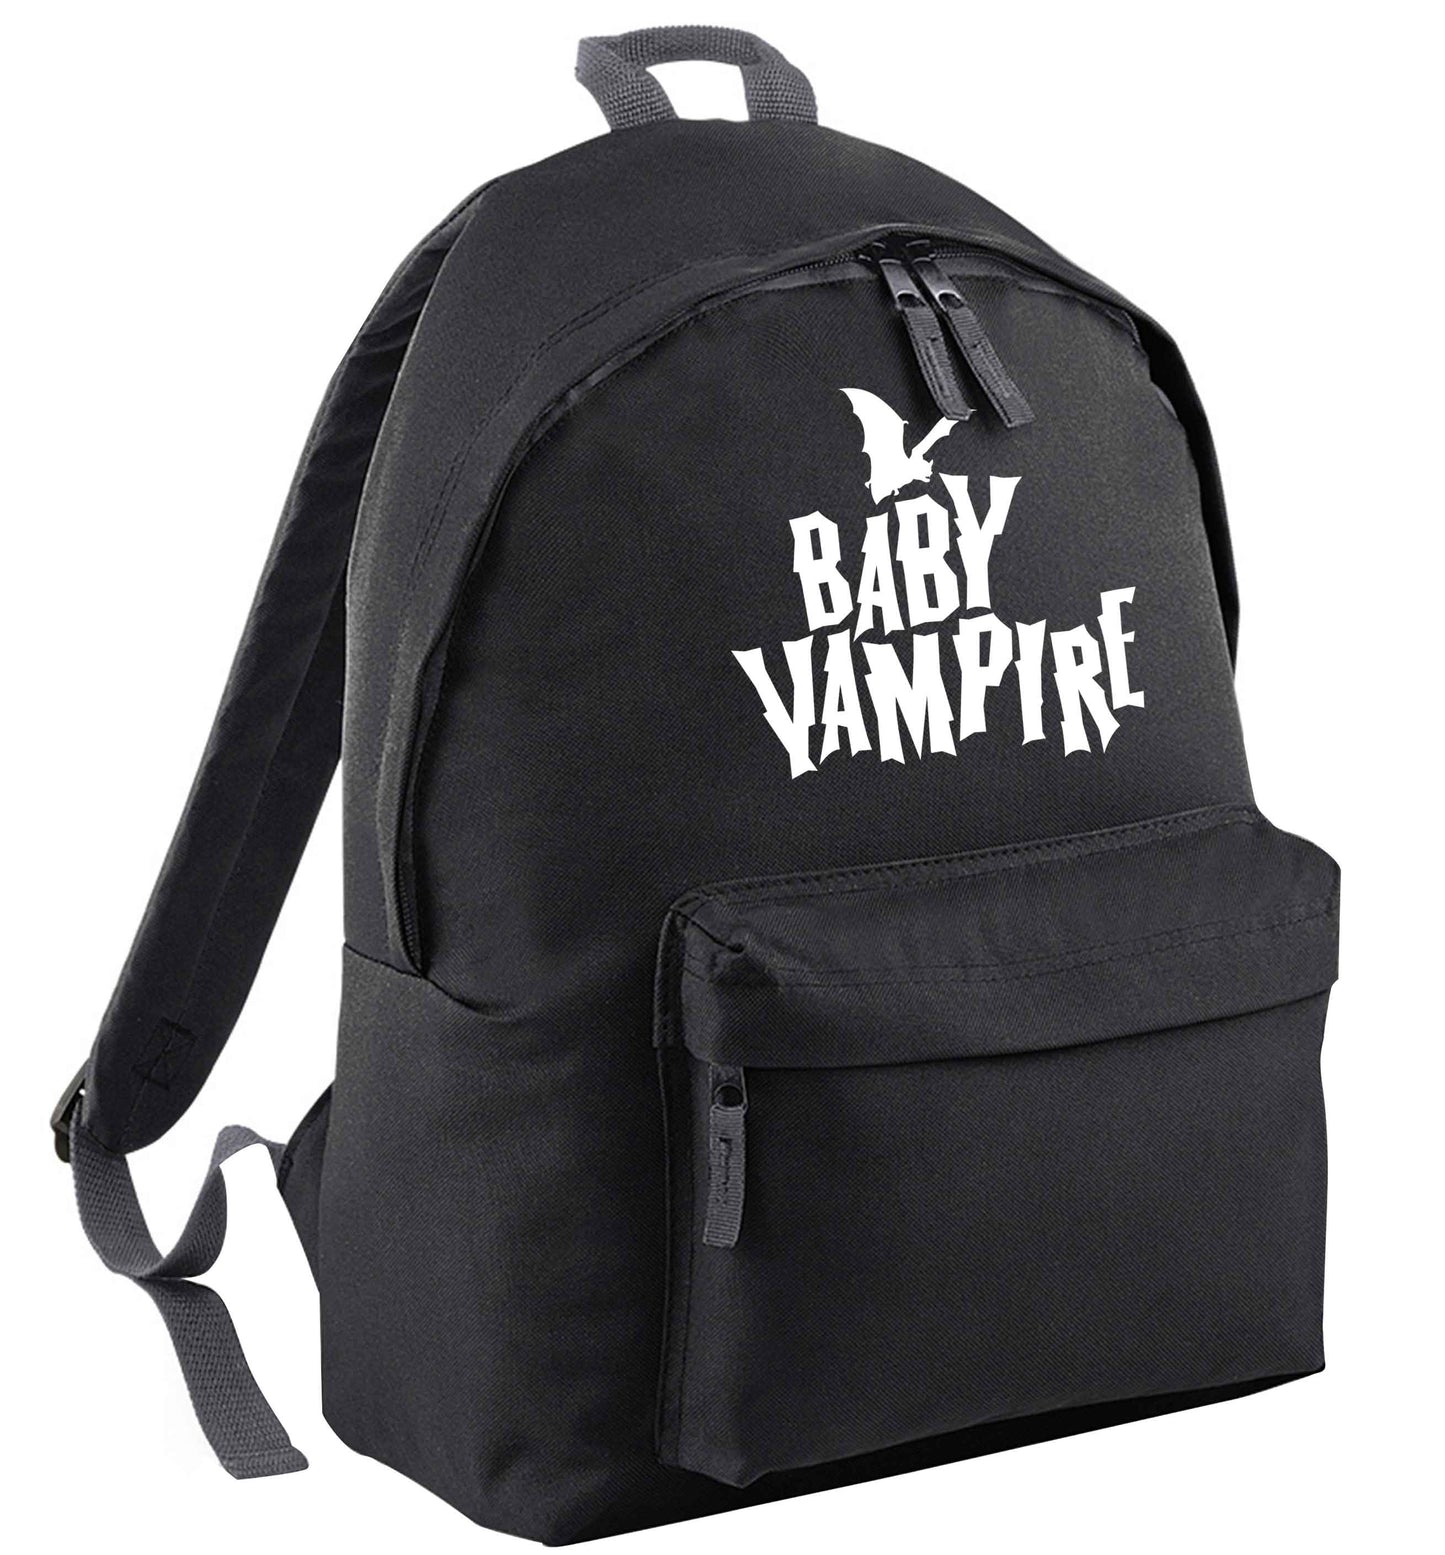 Baby vampire black adults backpack